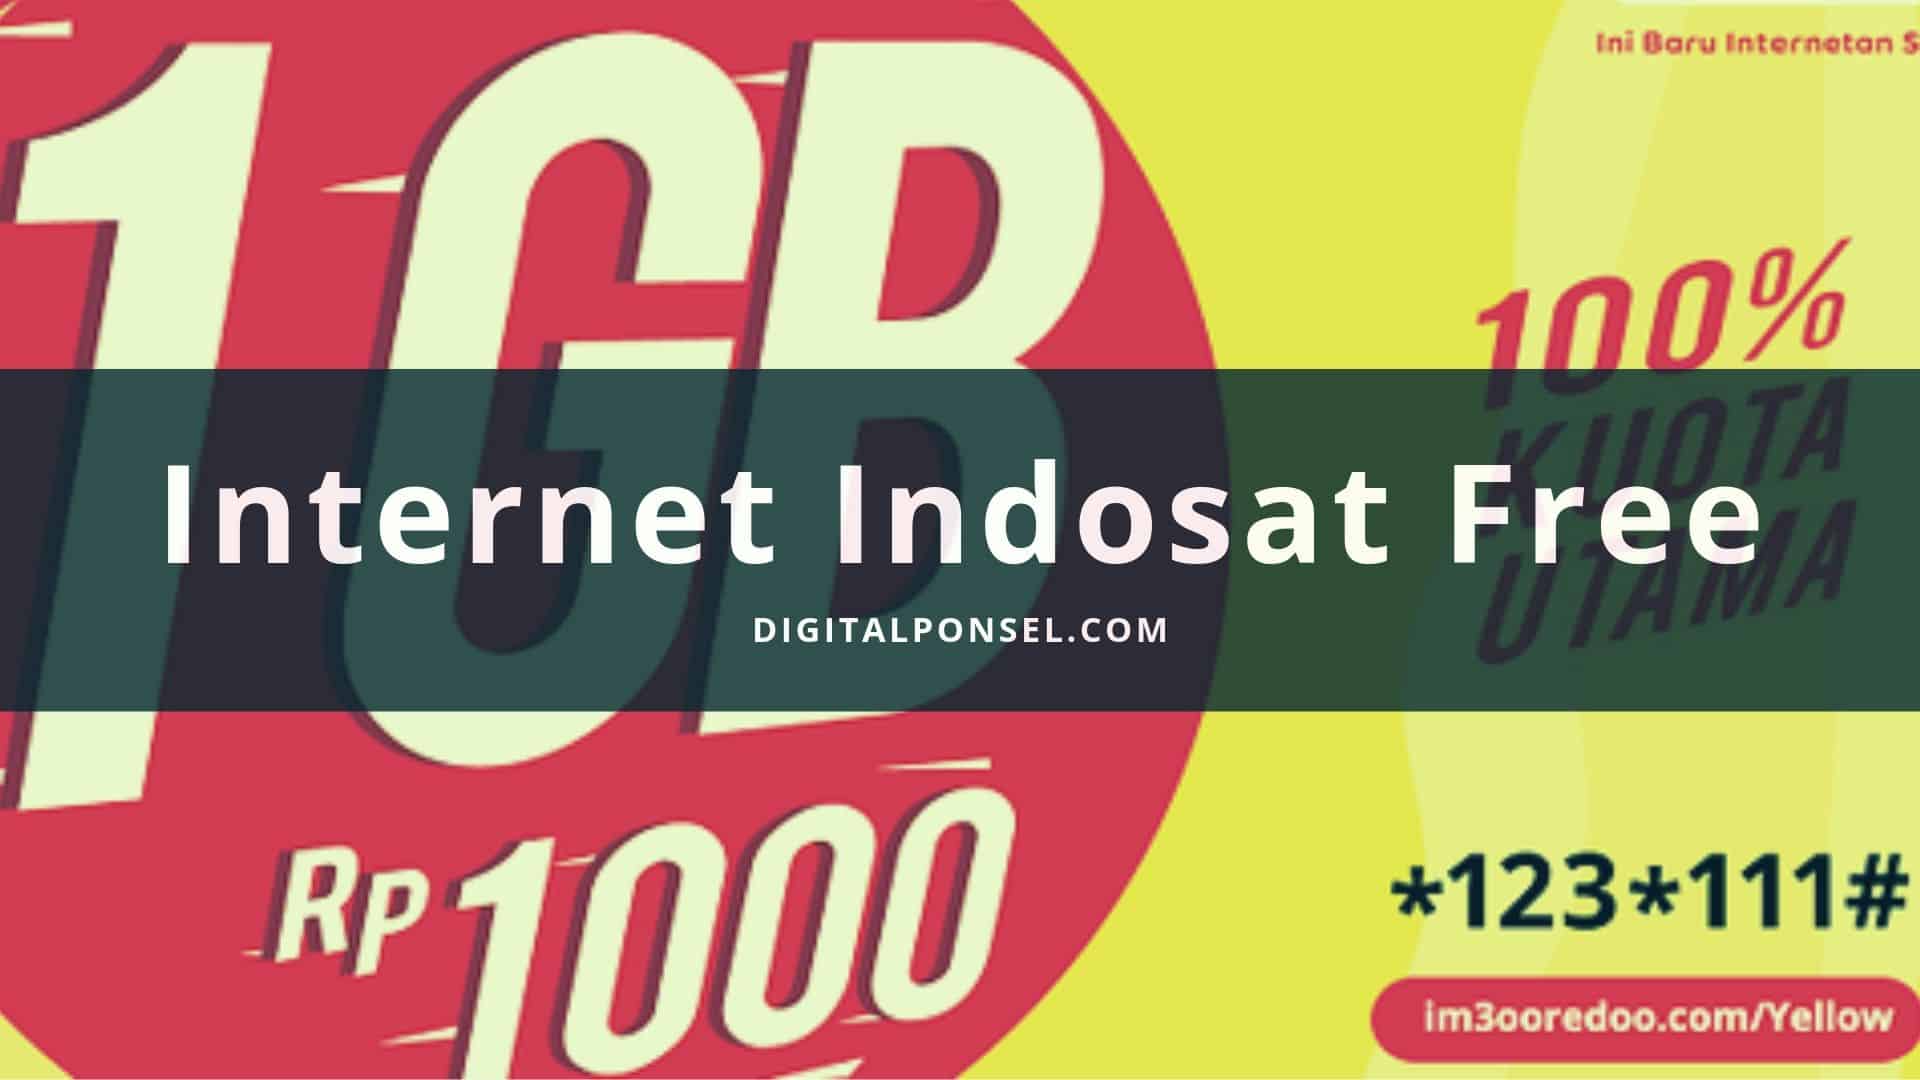 Cara Daftar Internet Gratis Indosat. Cara Internet Gratis Indosat tanpa Pulsa dan Kuota dengan WhatsVPN+HTTP Injector